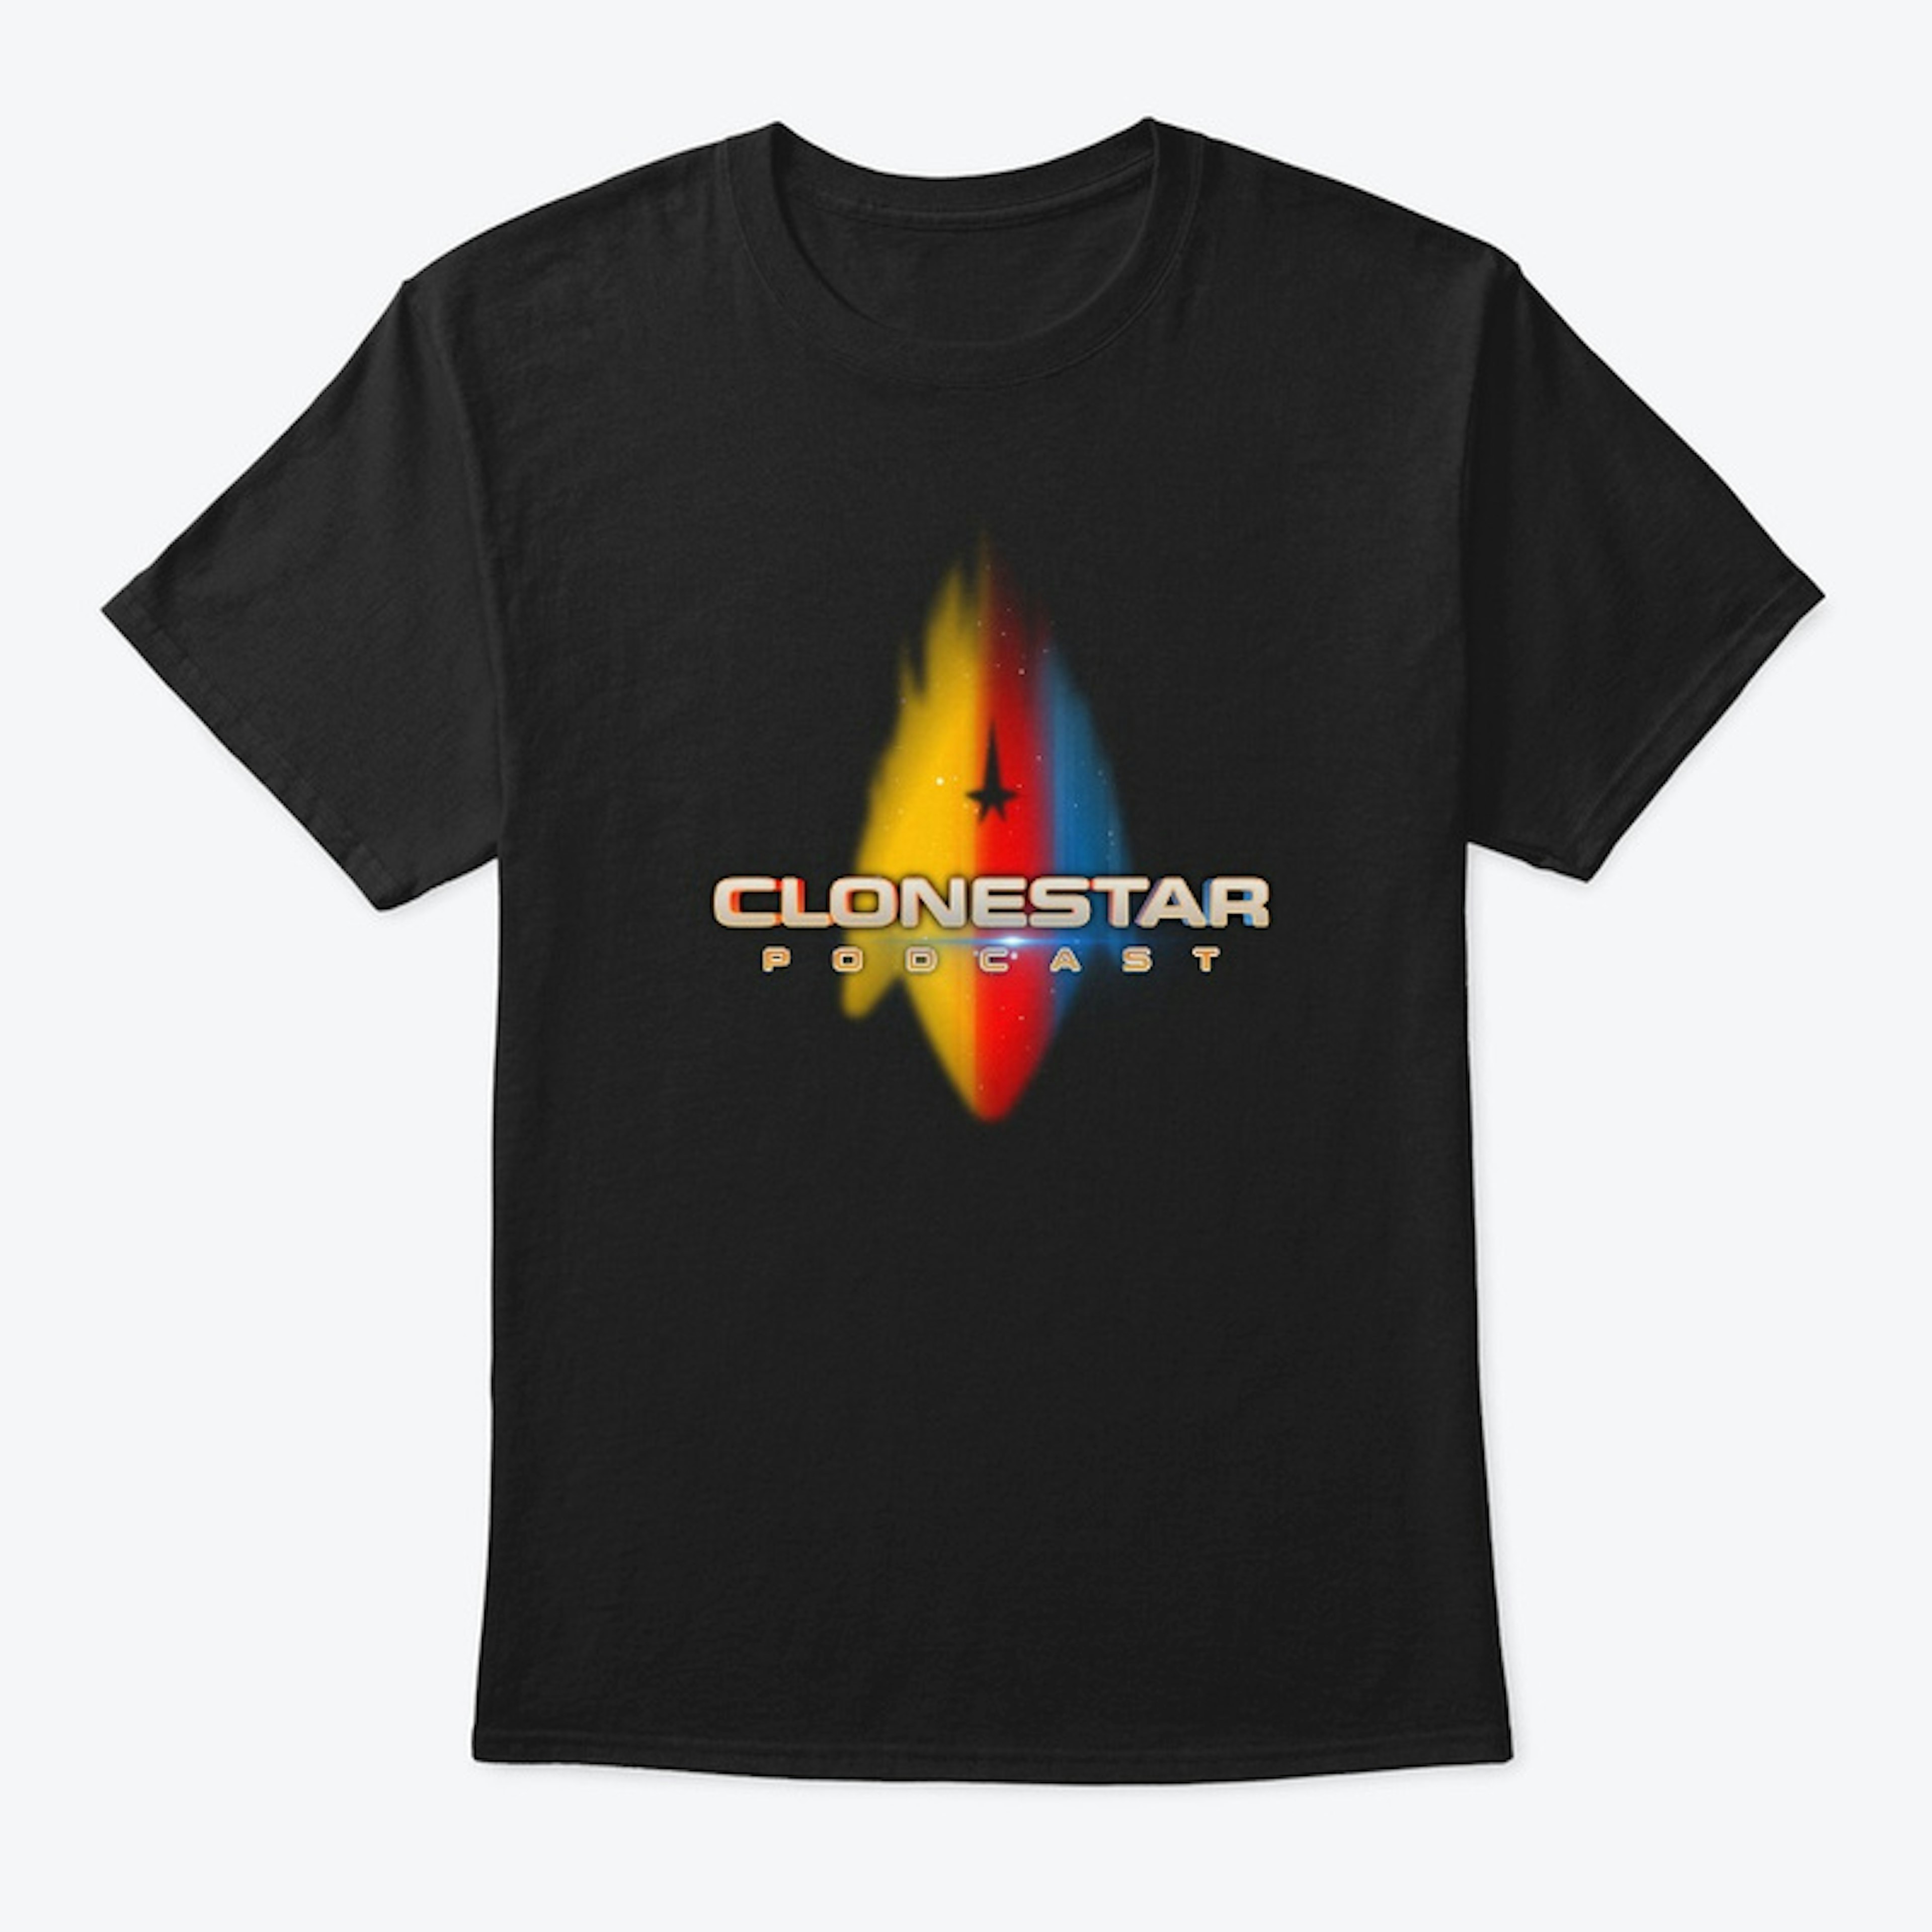 Clonestar Podcast - Tri-colour Large 